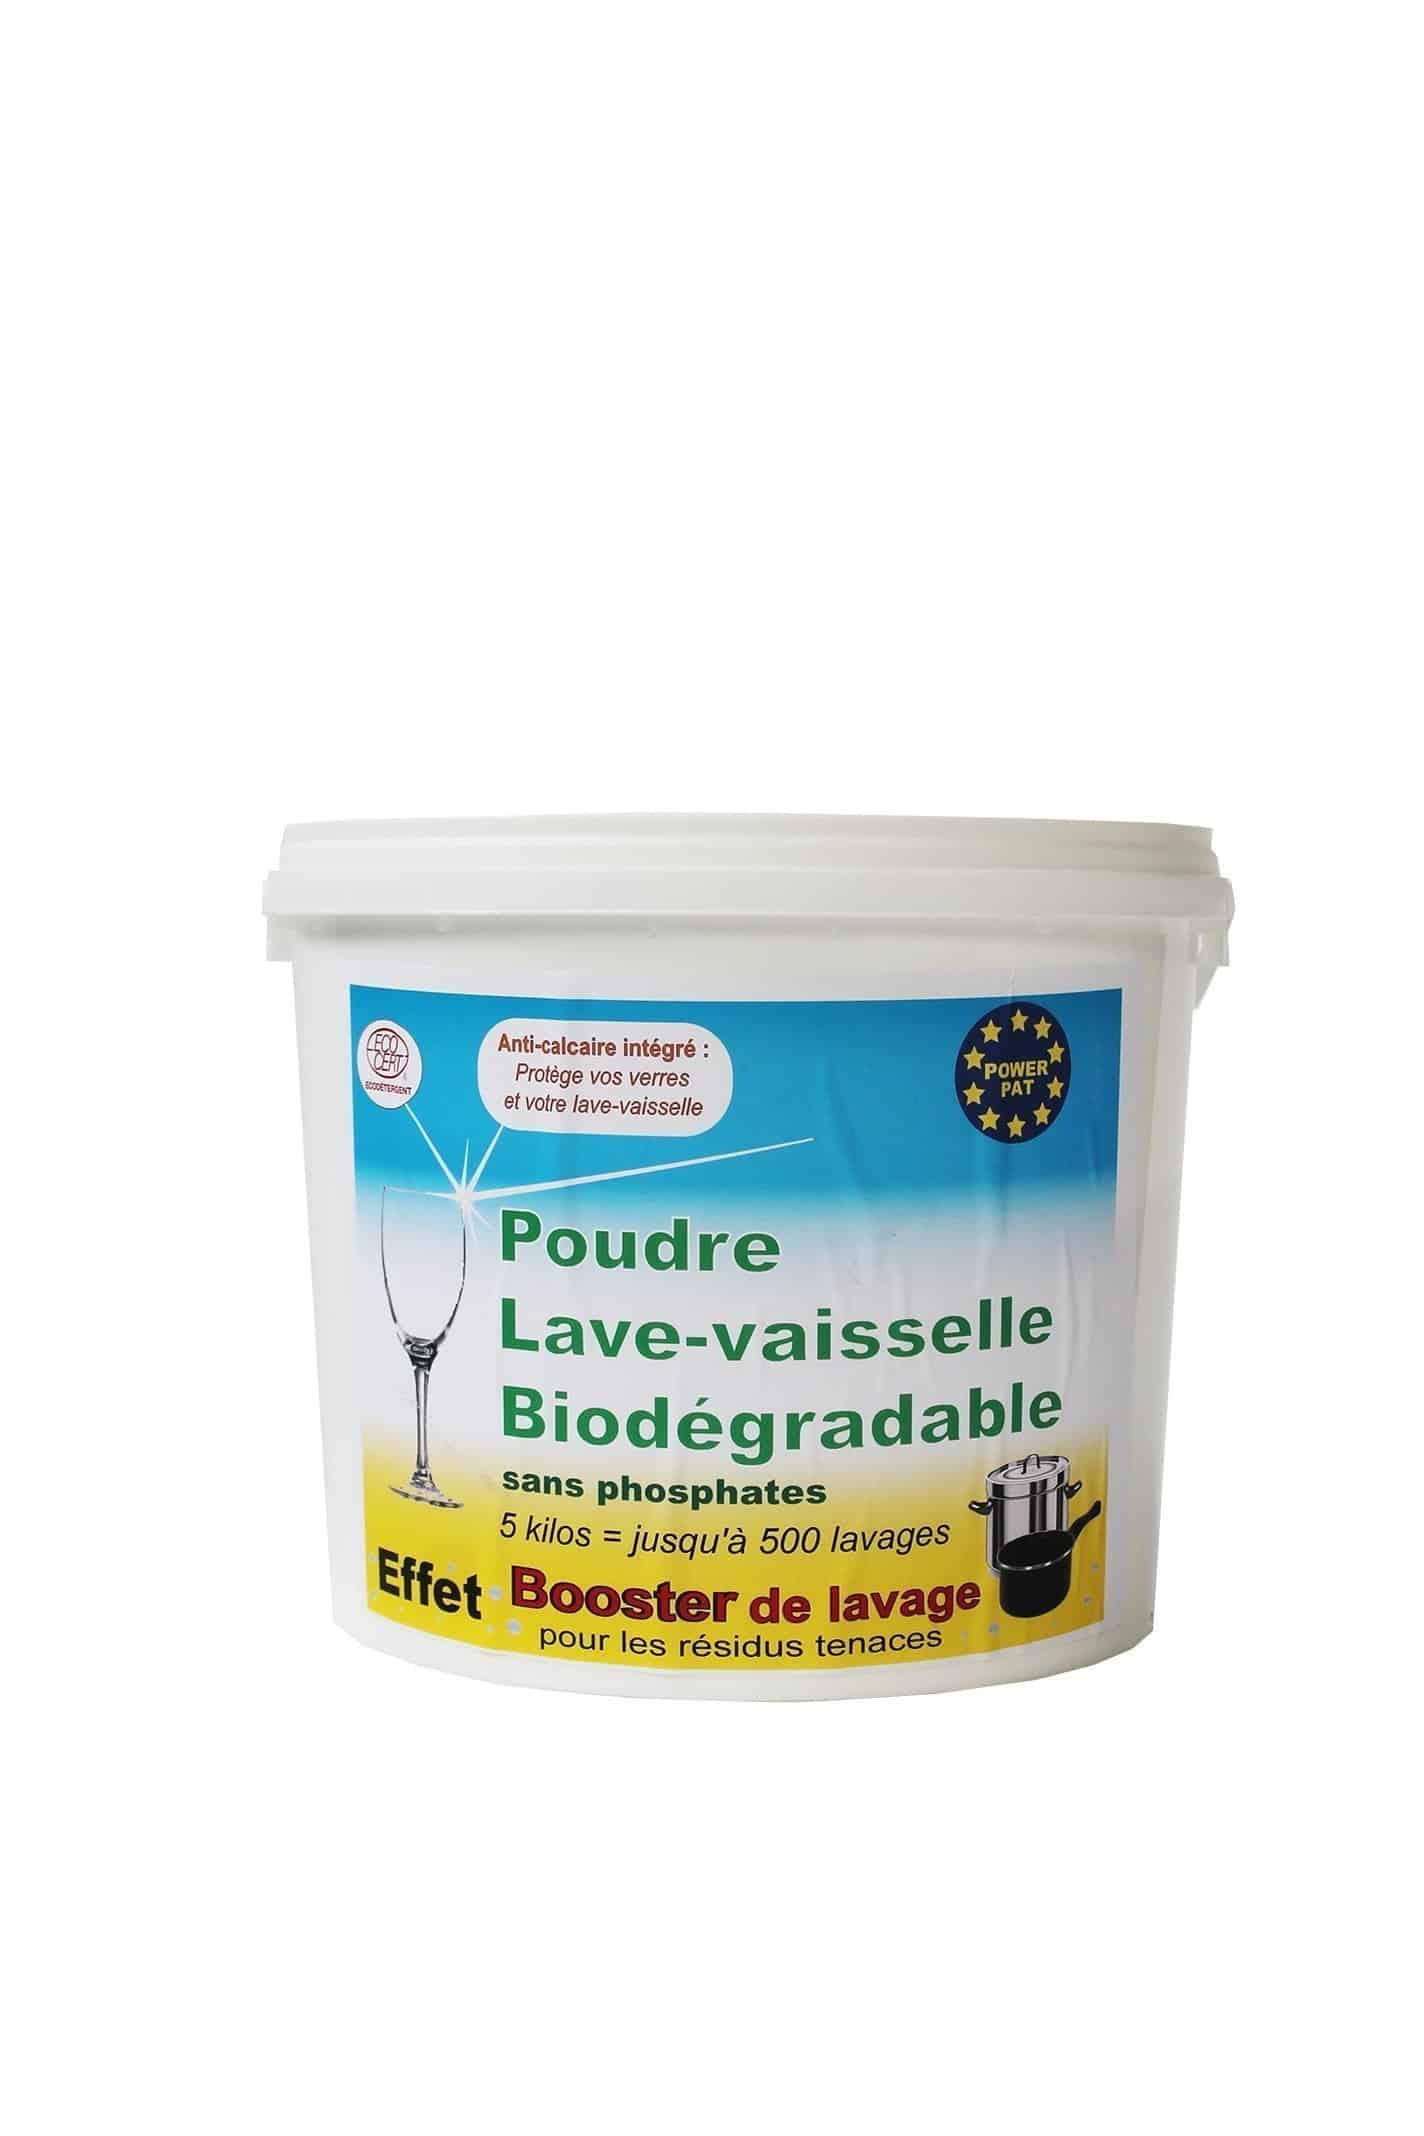 https://www.power-pat.fr/wp-content/uploads/2017/09/70-Poudre-lave-vaisselle-biodegradable-ECODETERGENT.jpg